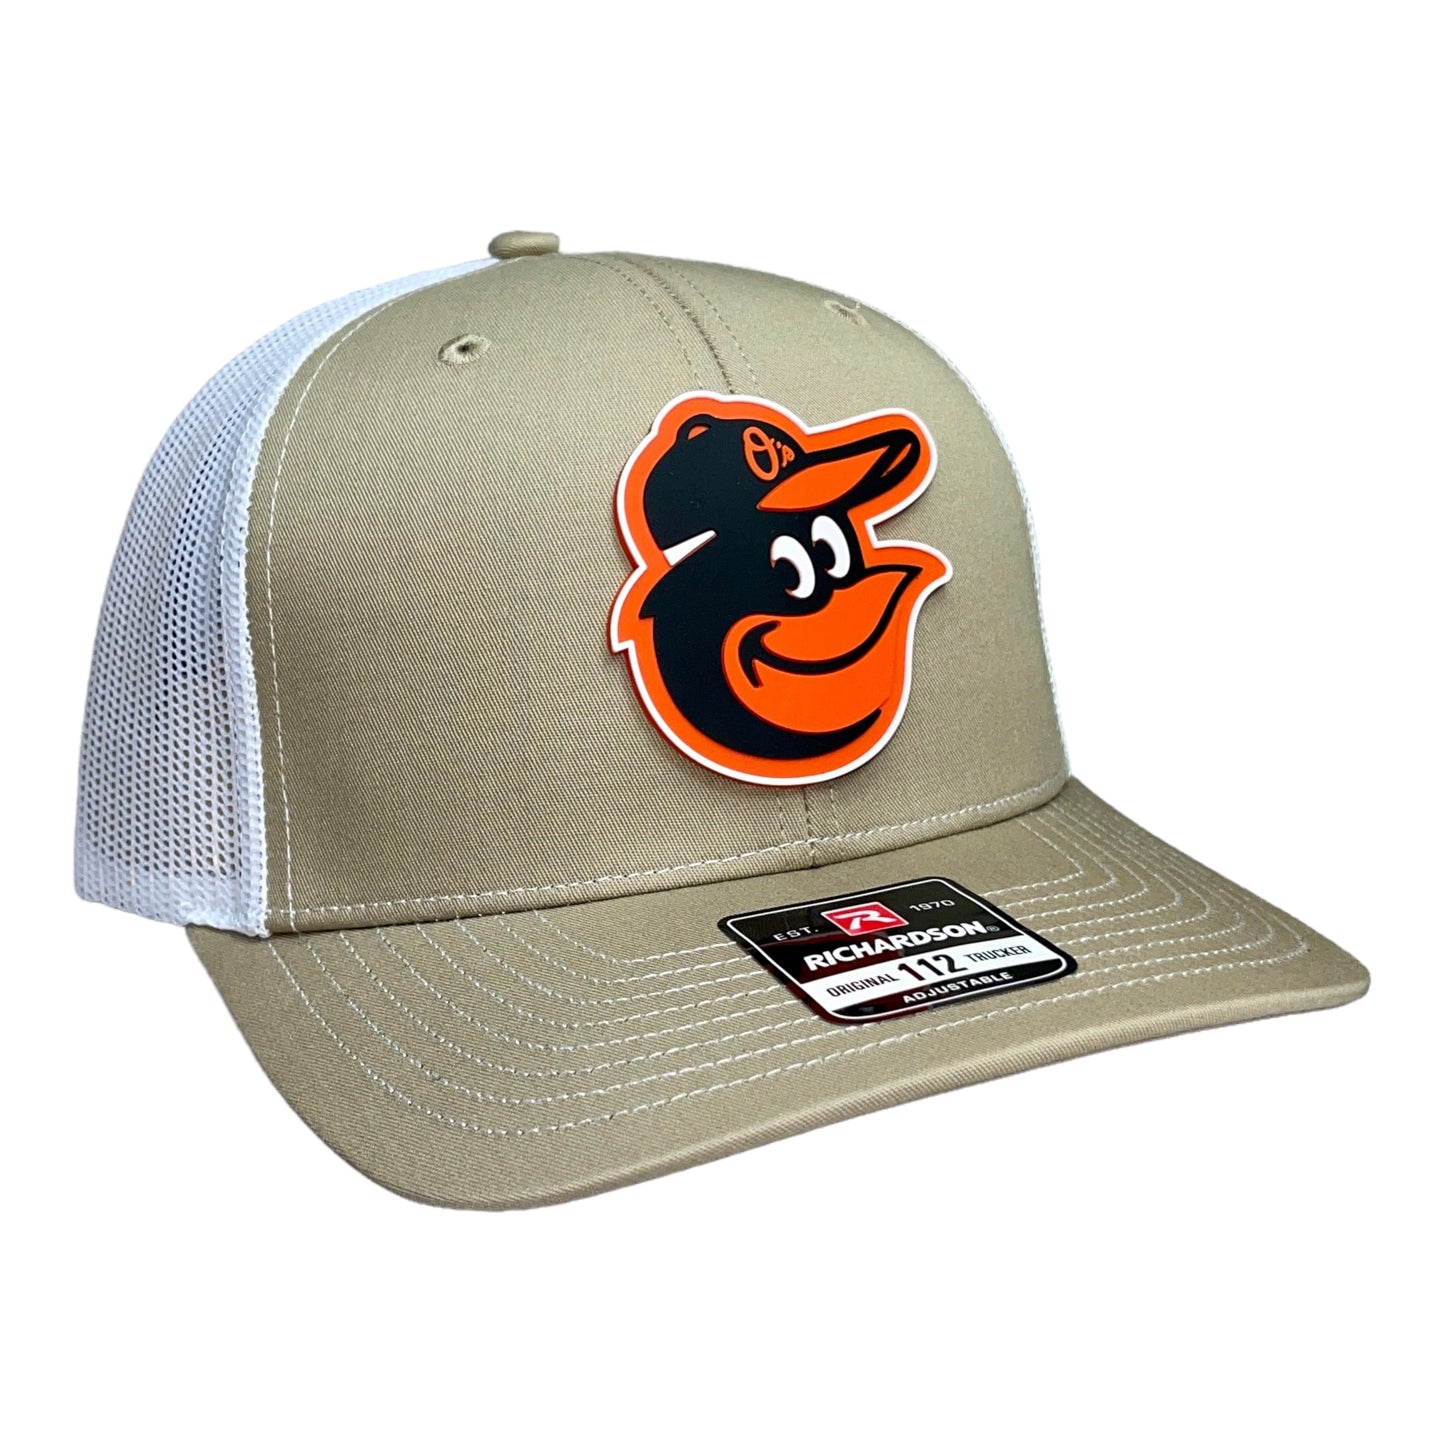 Baltimore Orioles 3D Snapback Trucker Hat- Tan/ White